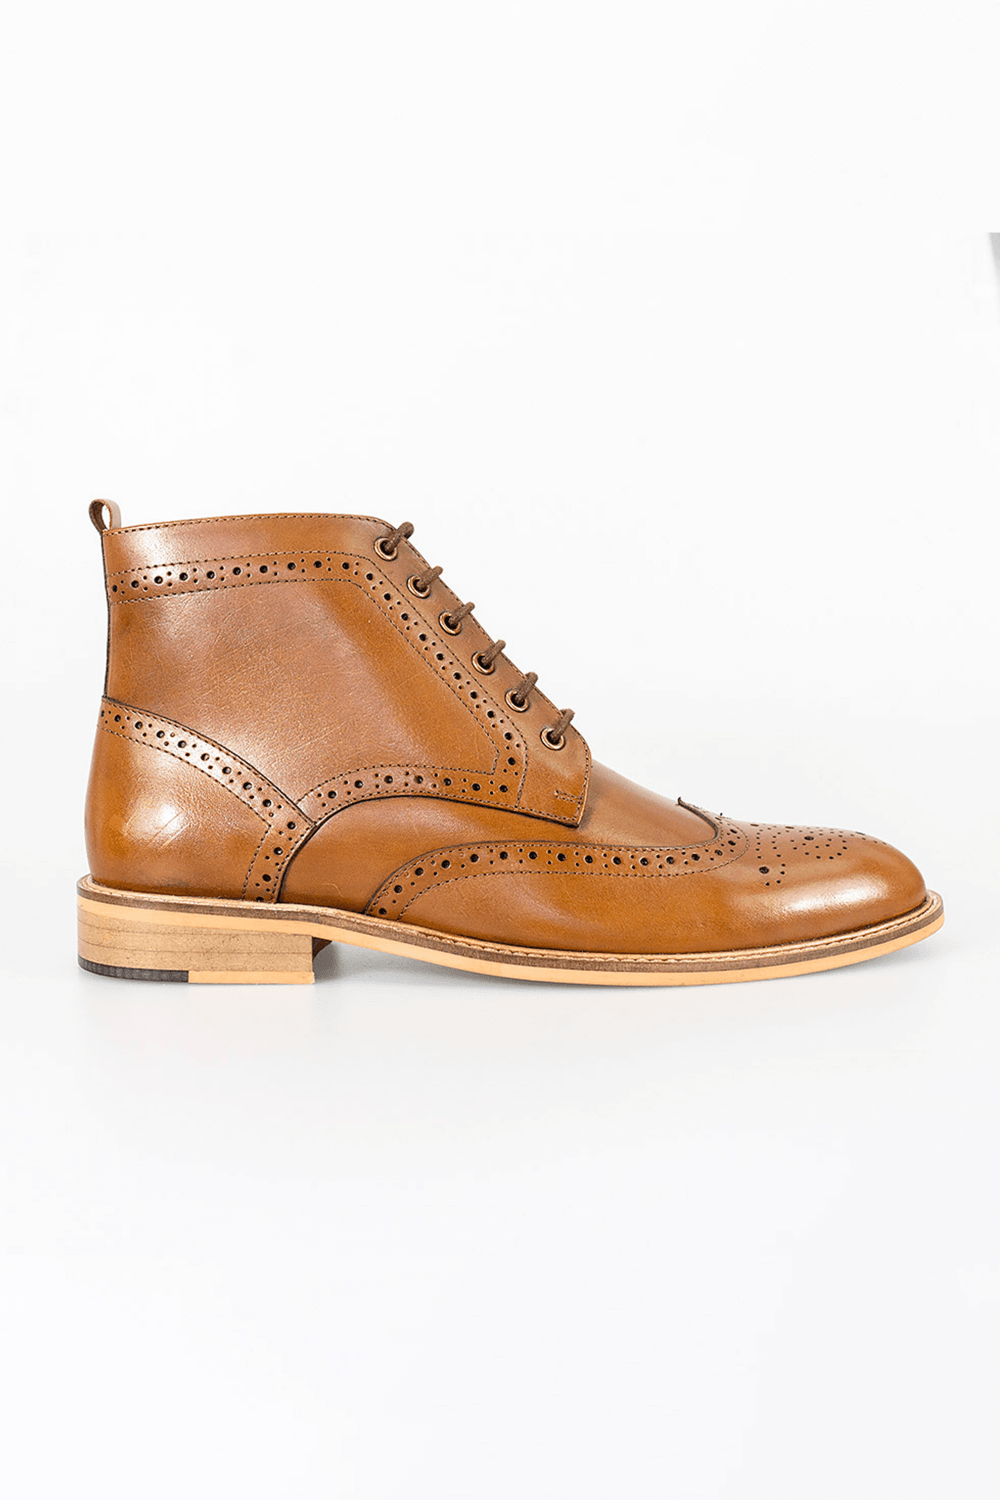 Cavani Holmes Signature topánky svetlo hnedé